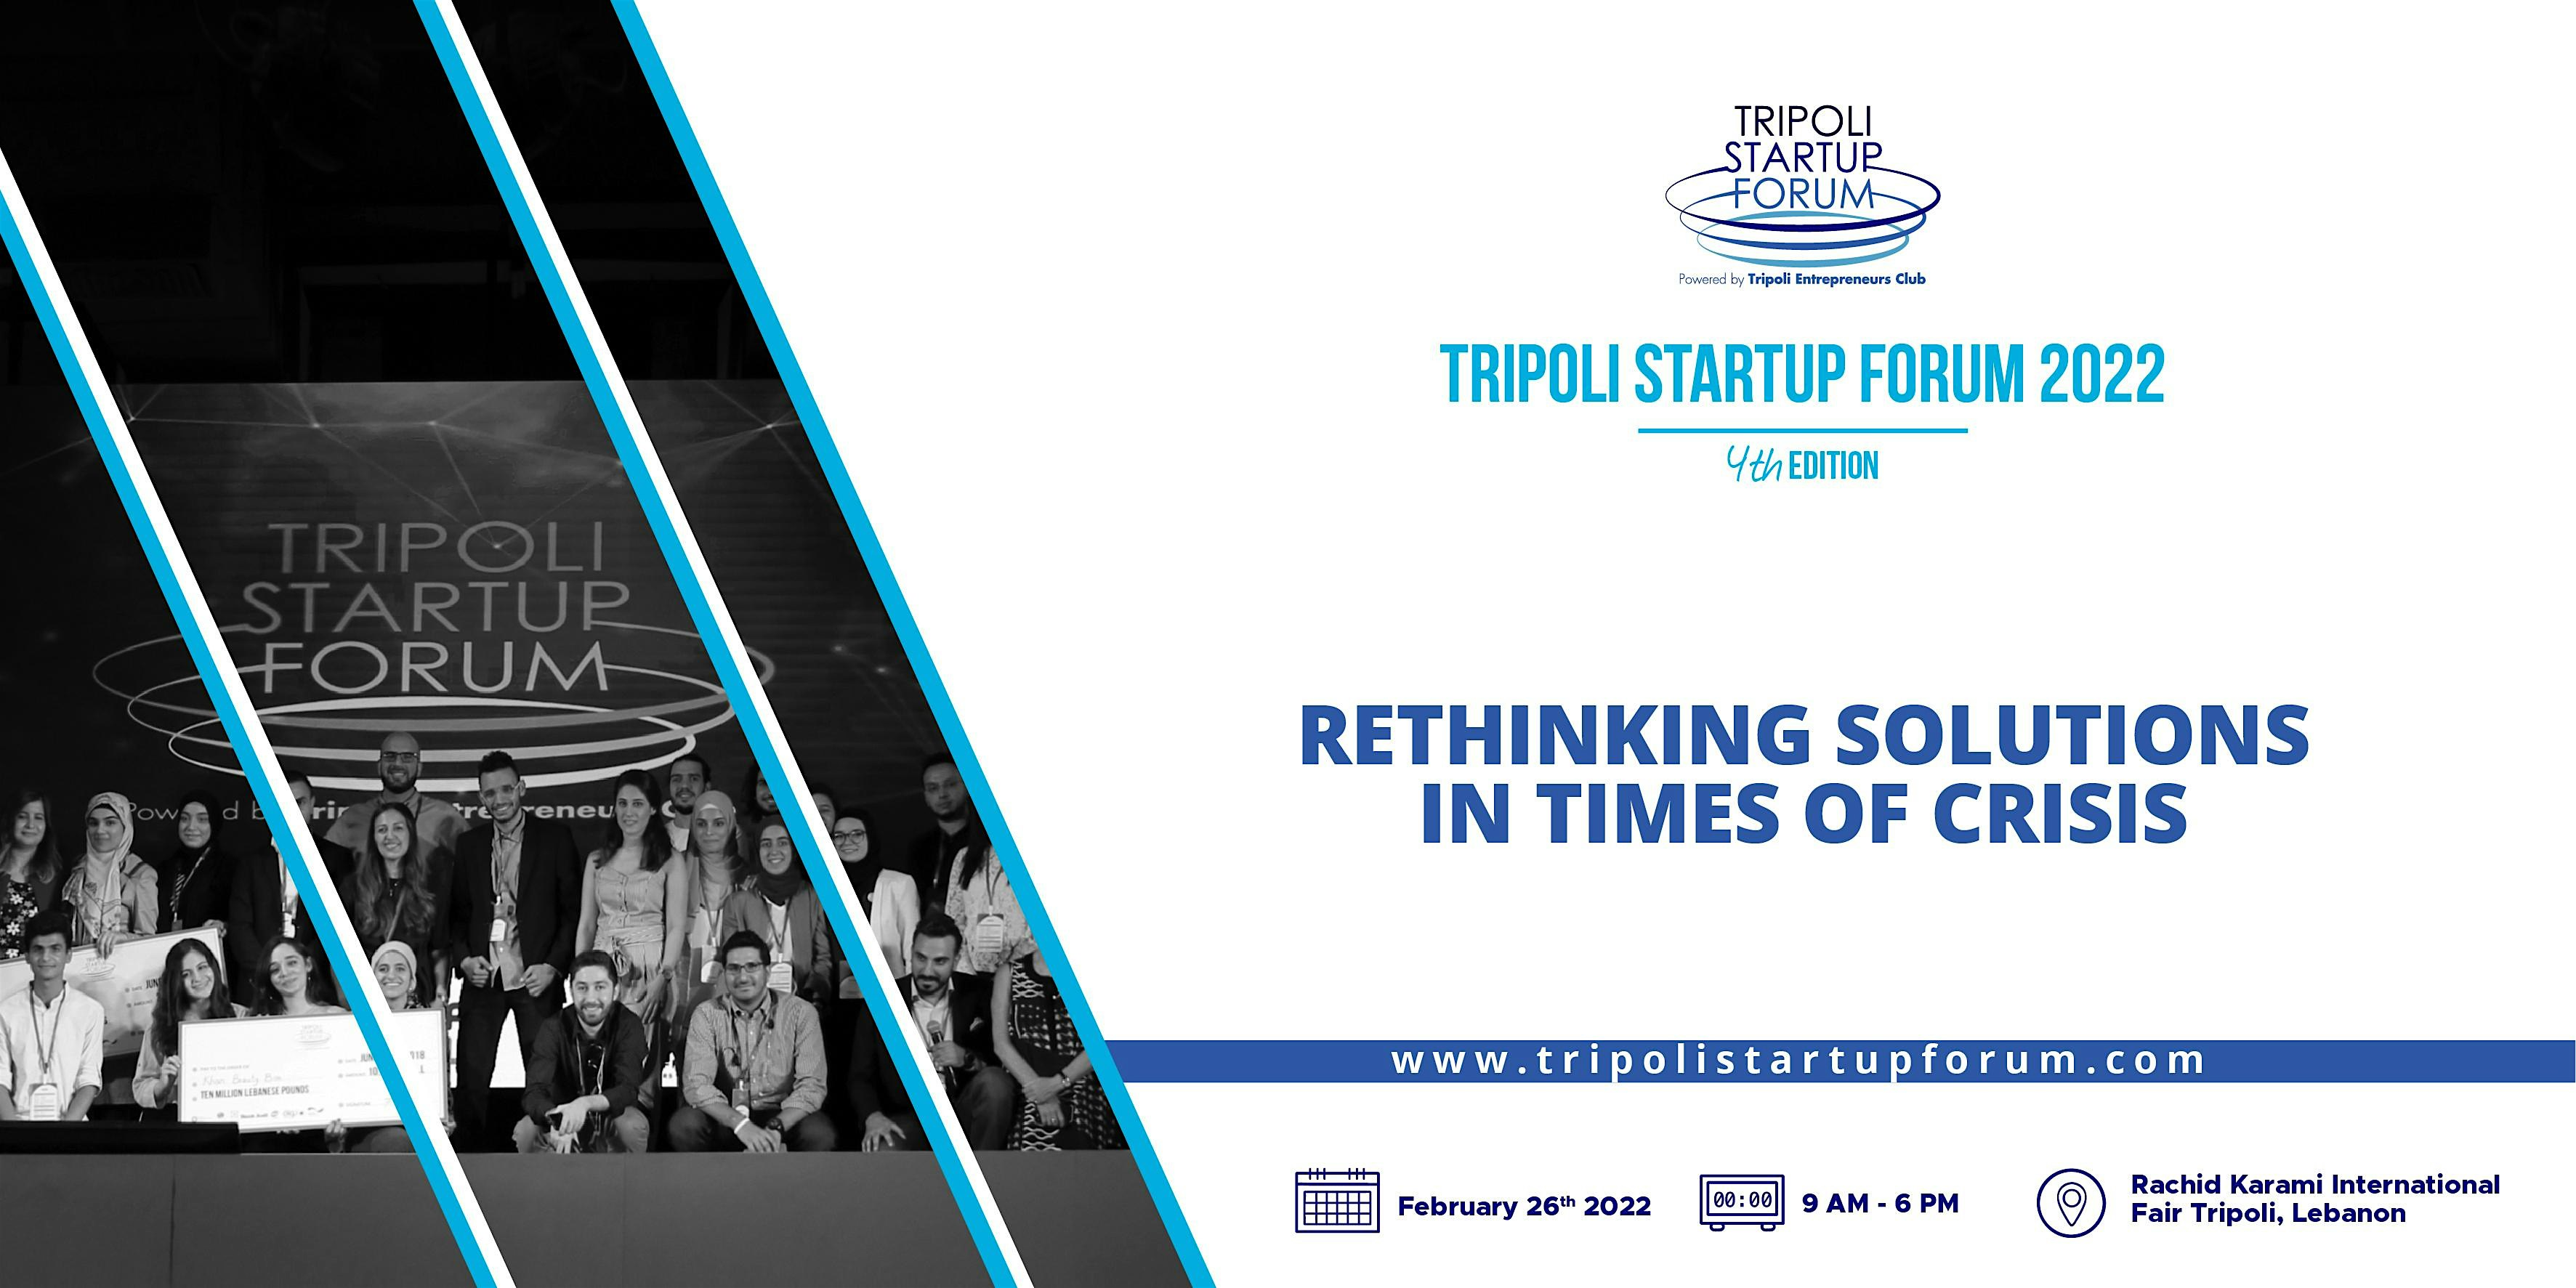 Tripoli Startup Forum 2022